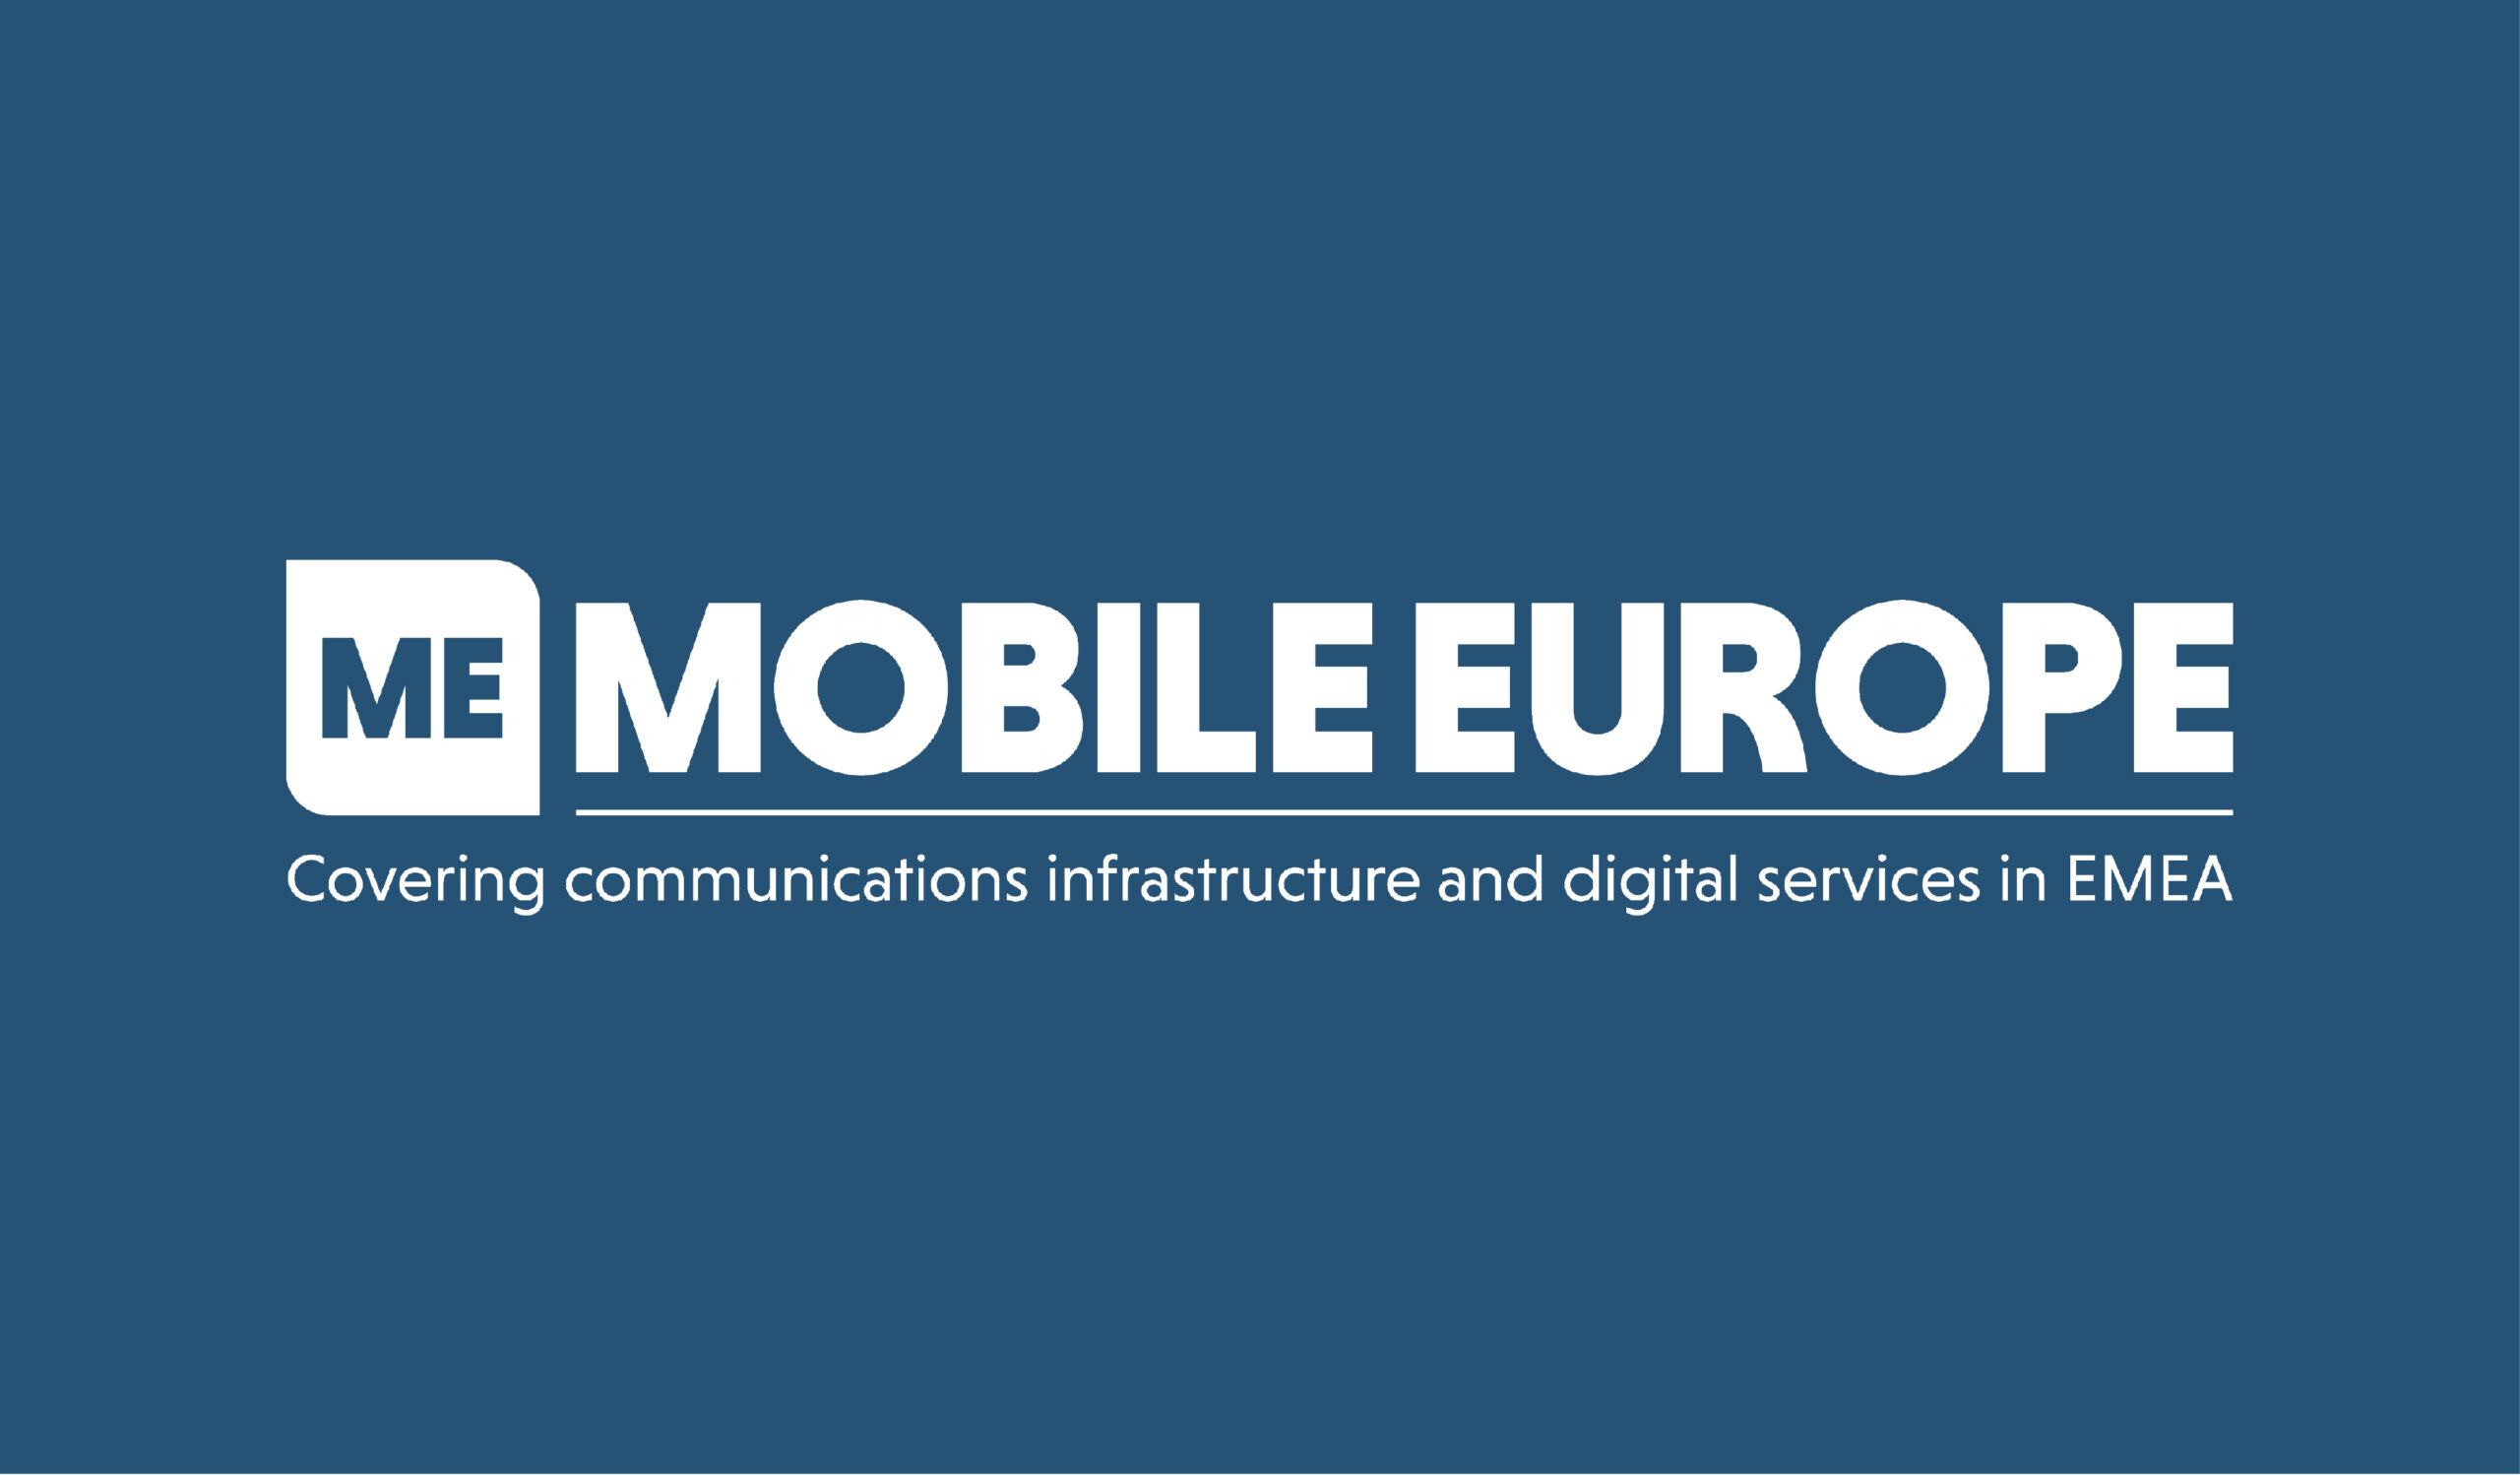 Mobile Europe (ME) logo